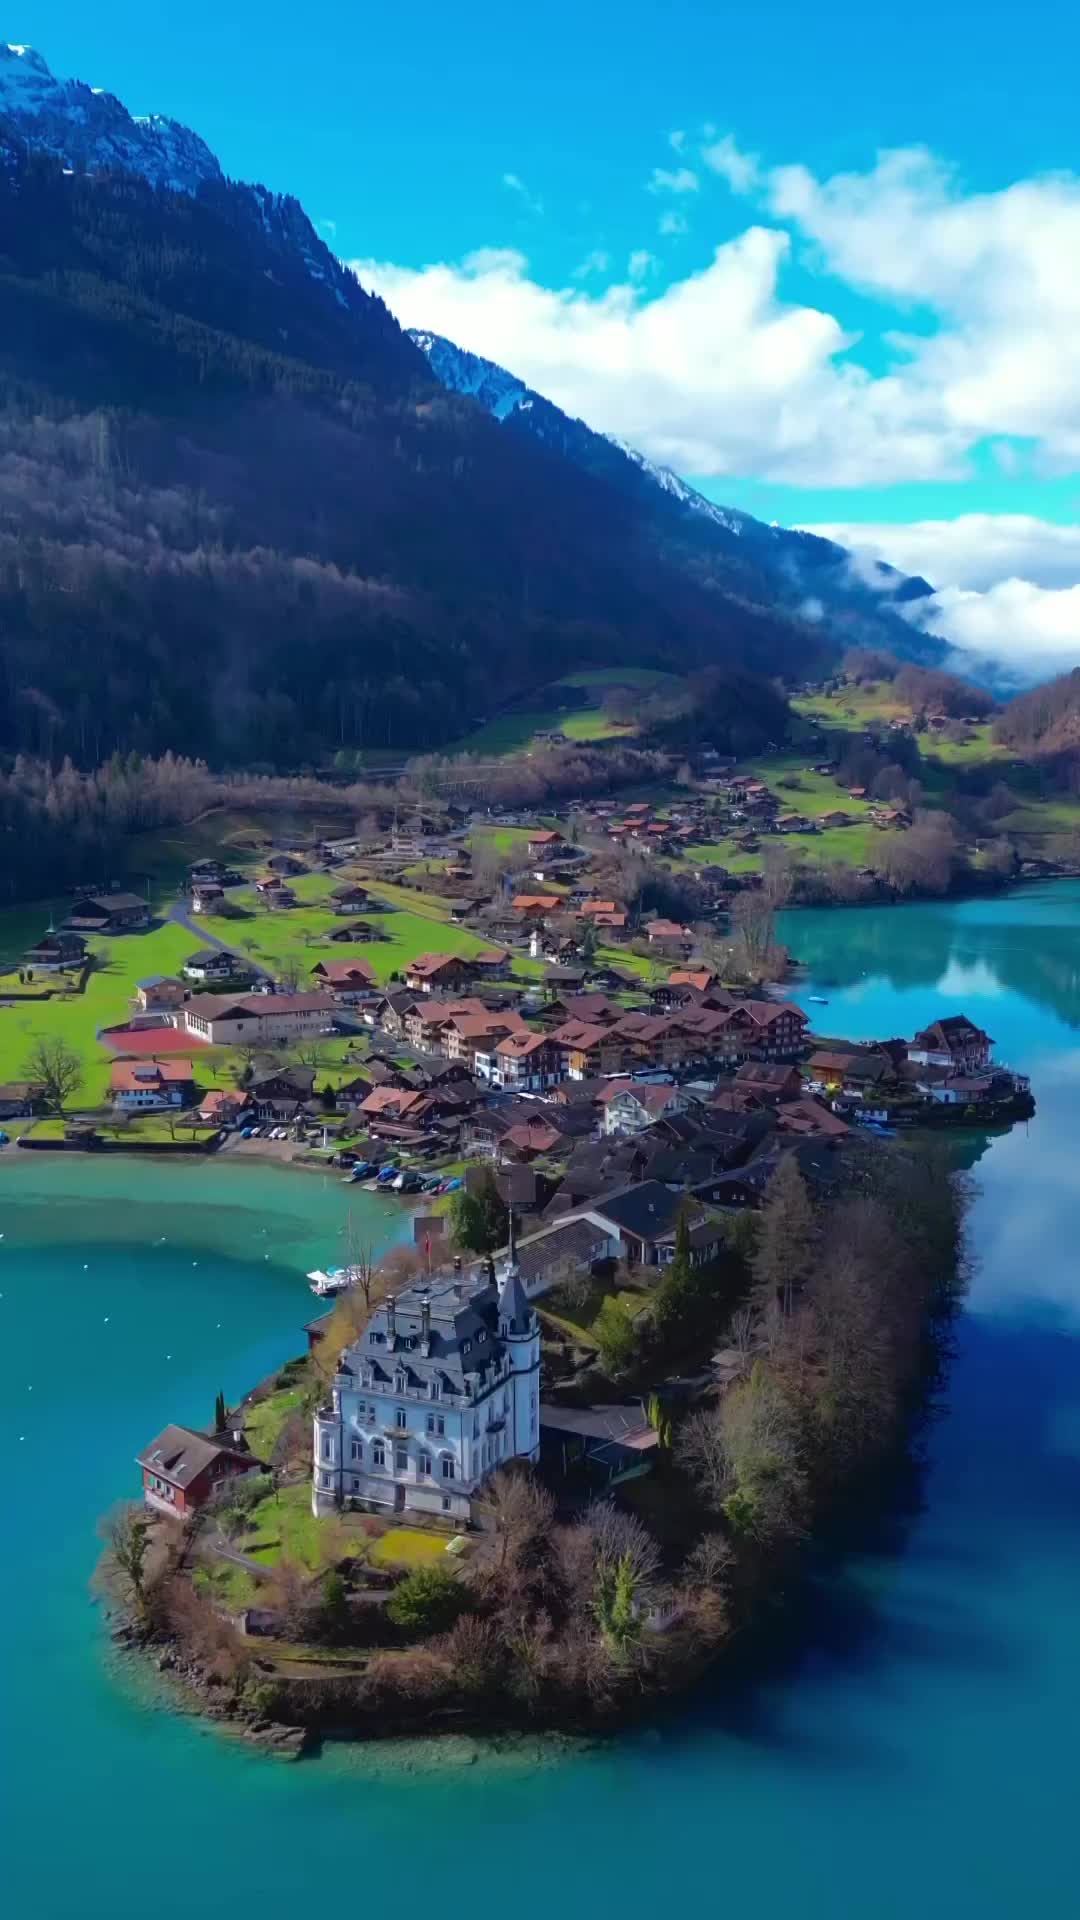 Discover the Paradise of Iseltwald, Switzerland